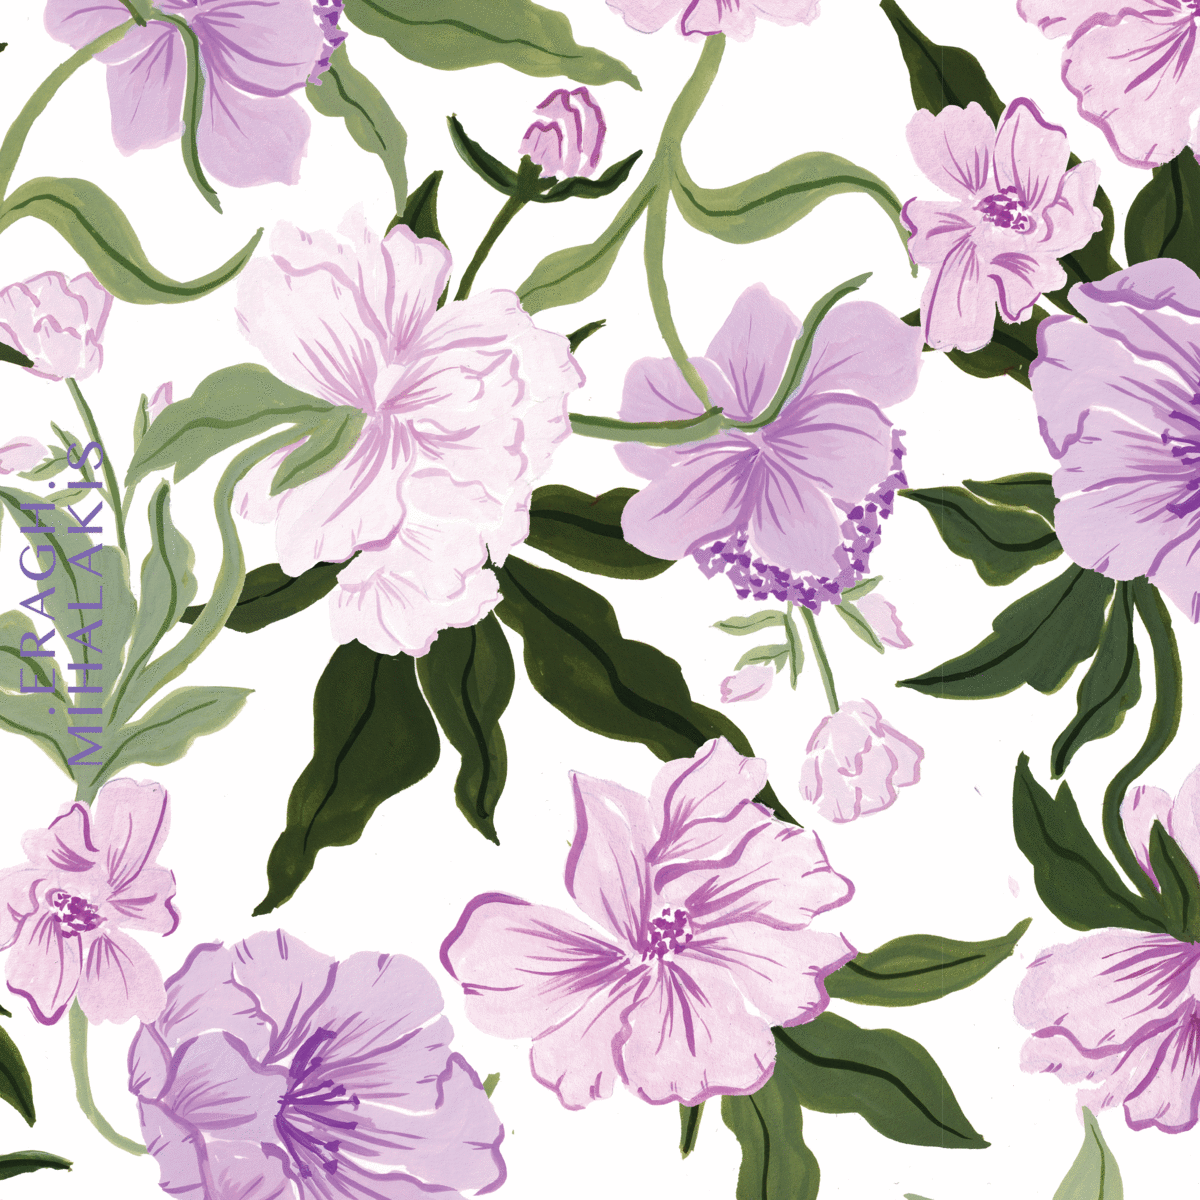 custom design eragh mihalakis purple floral background